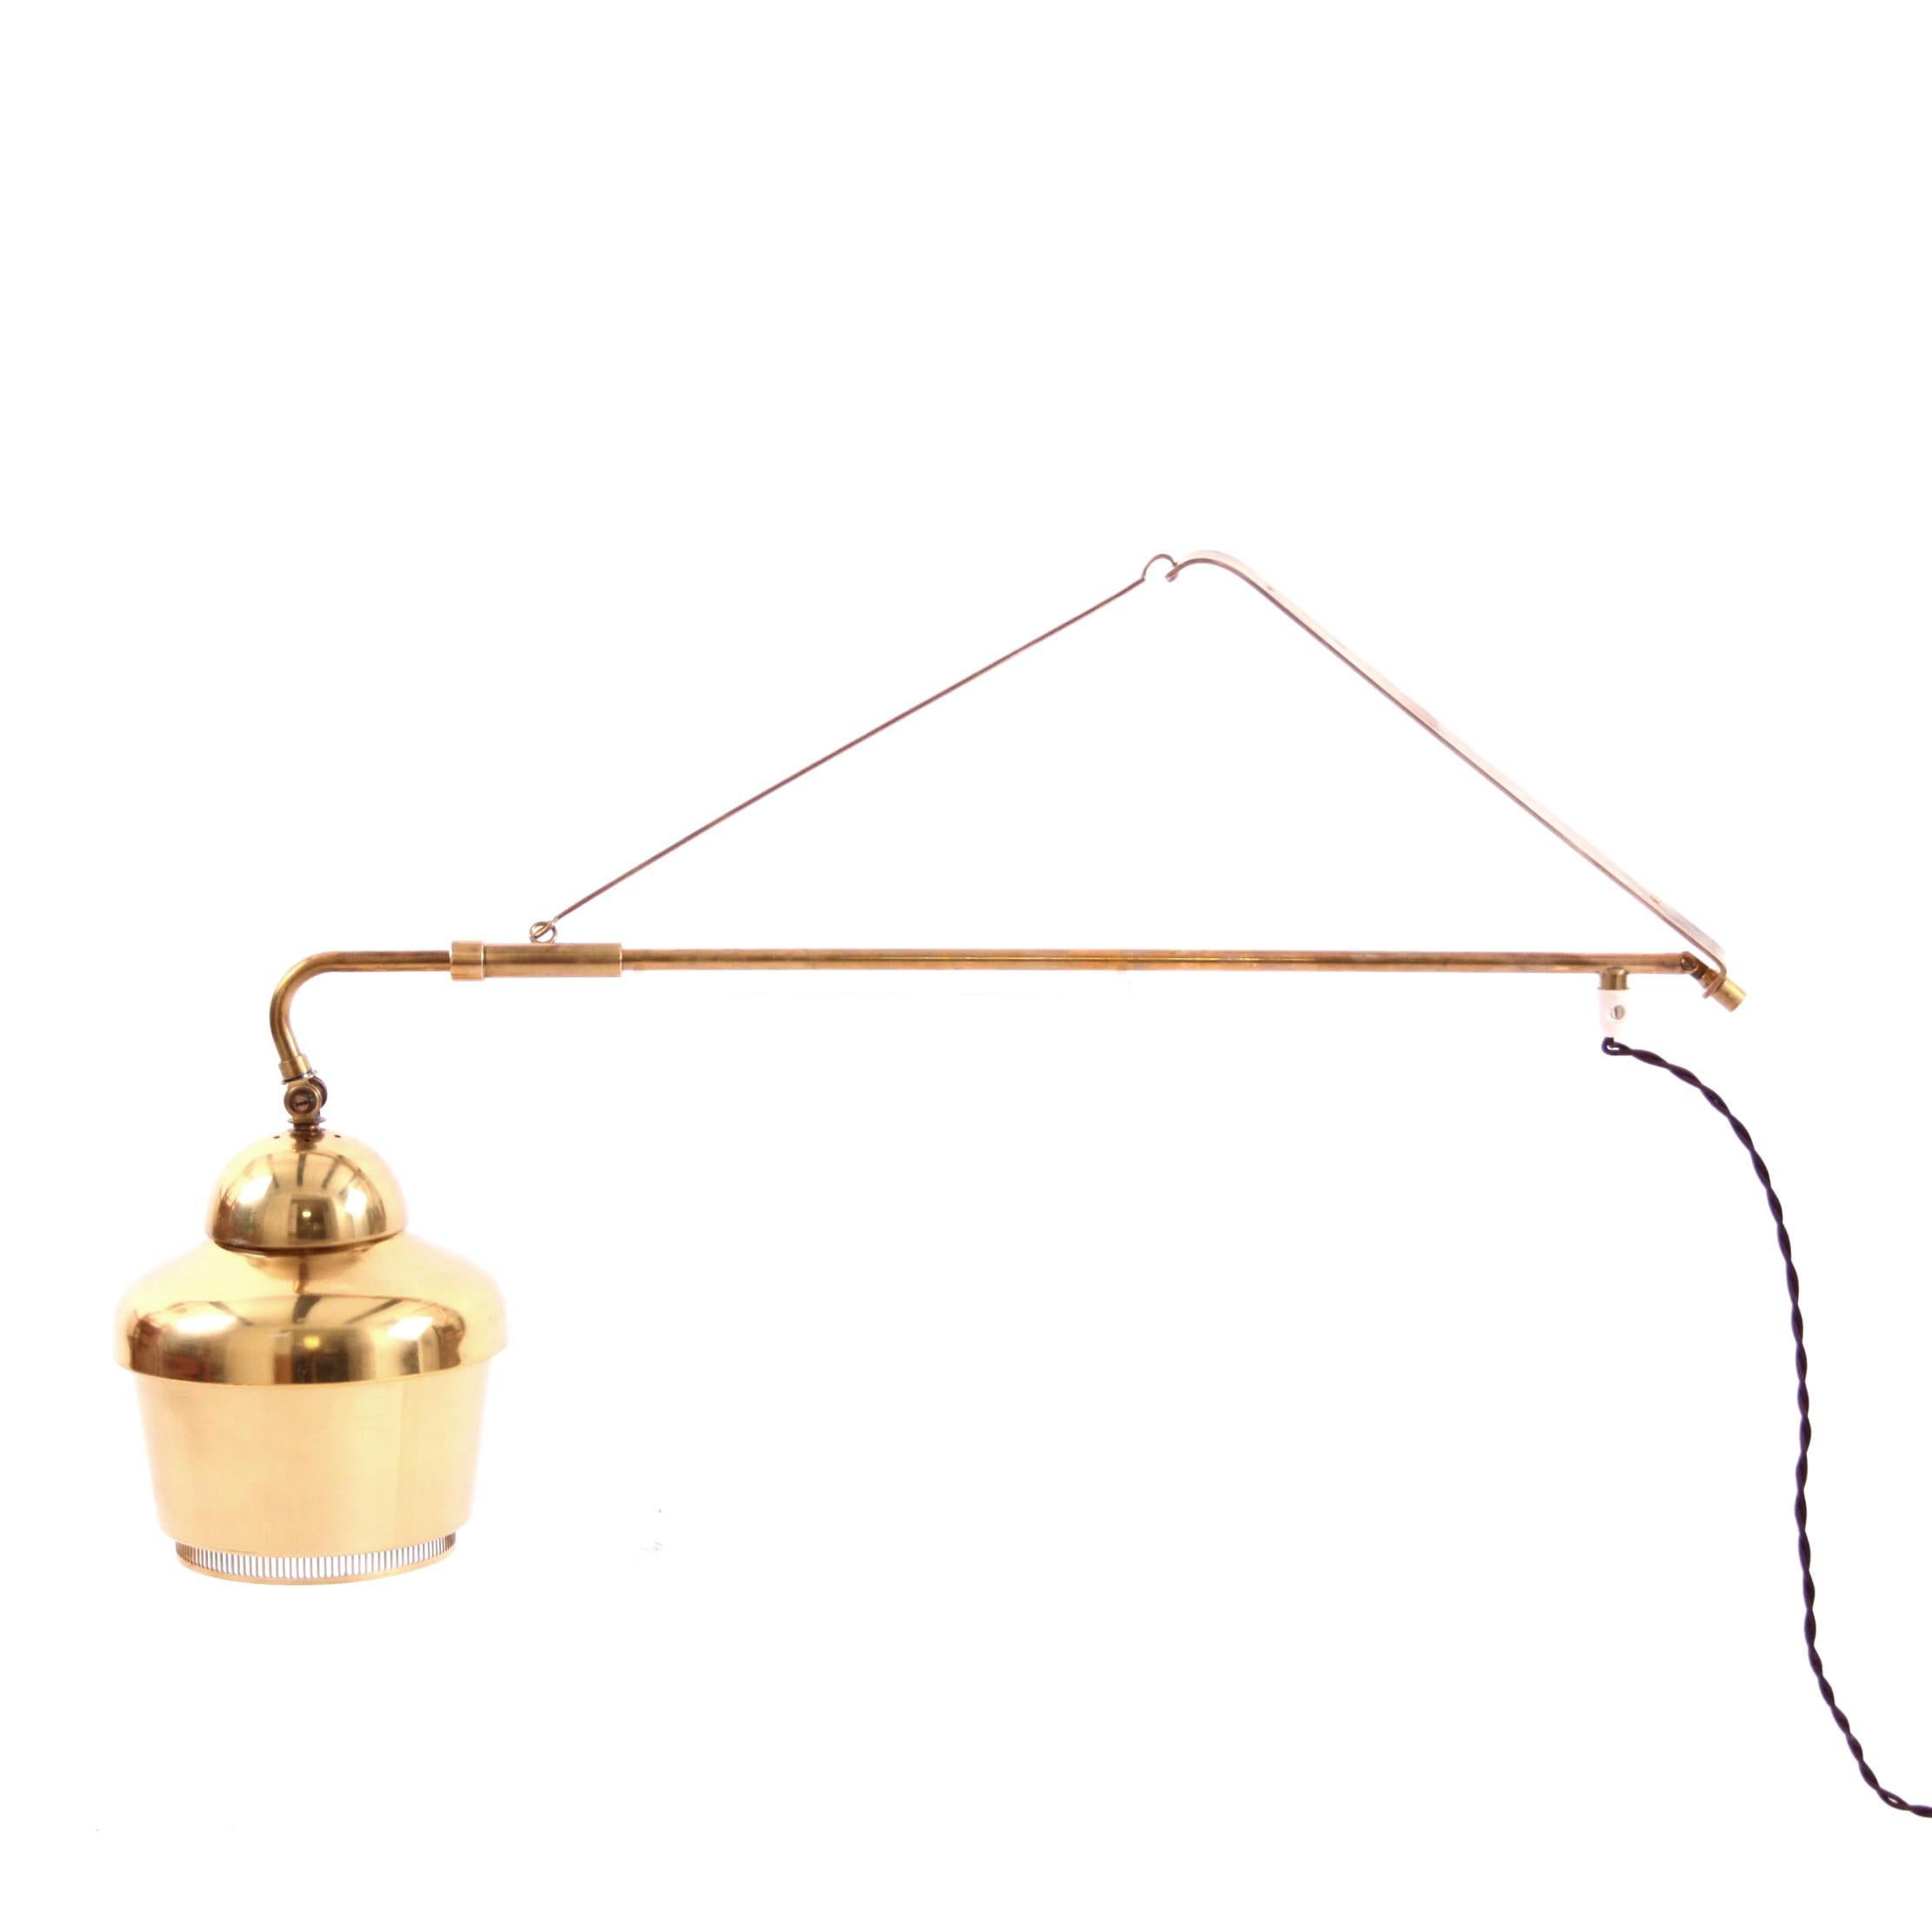 ALVAR AALTO & VALAISTUTYO - SCANDINAVIAN MODERN

A rare wall light in brass by Alvar Aalto. The light is a version of the Classic Alvar Aalto Golden bell model A 3305 pendant.

Originally designed in 1937, the lamp was a custom order from